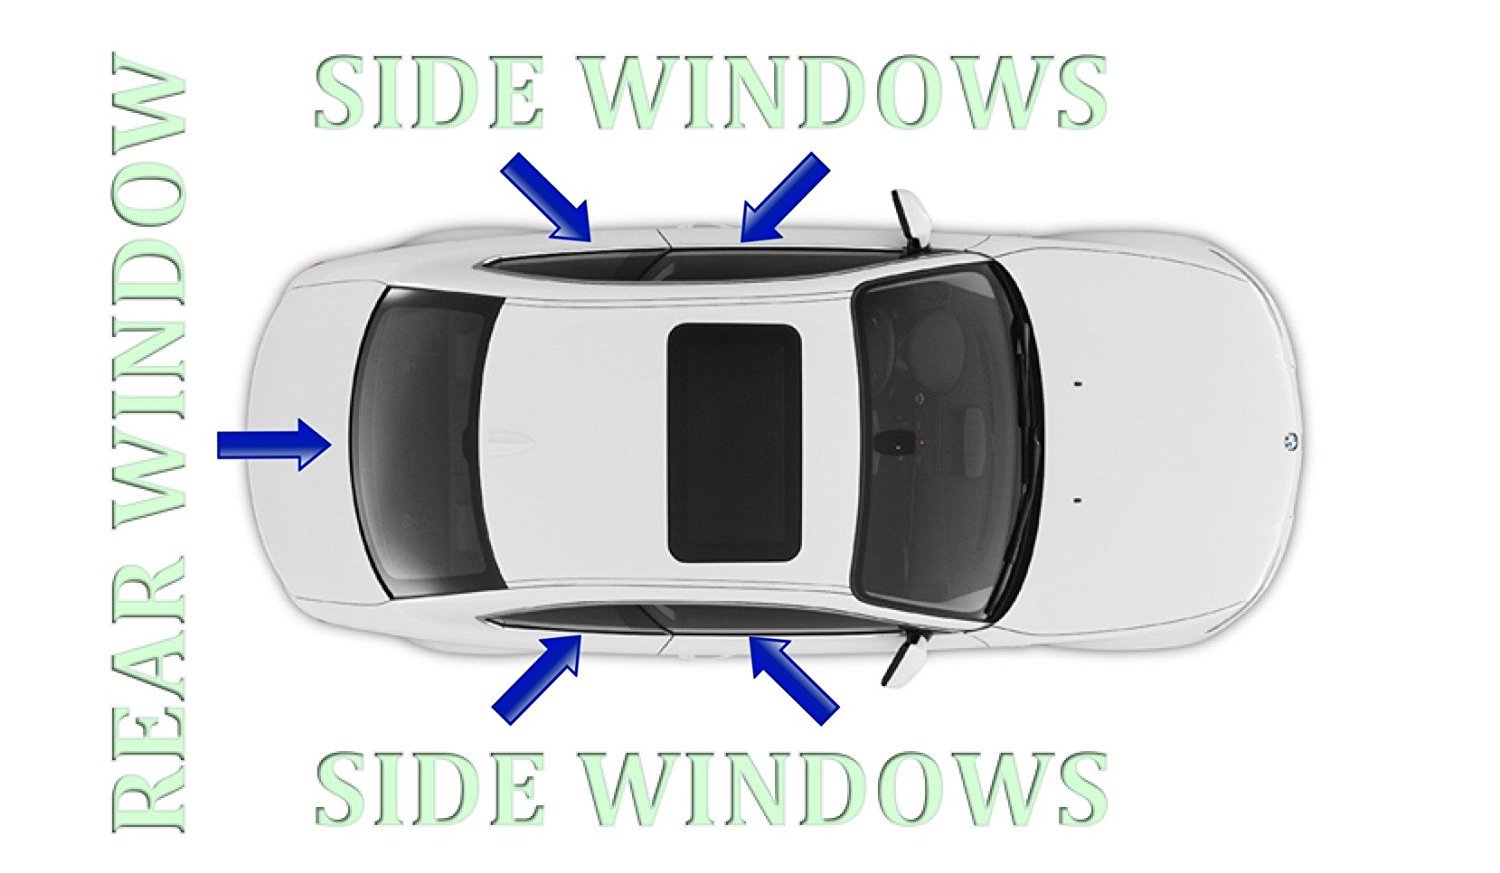 Autotech Park Precut Window Tinting Film for 2014-2020 Infiniti Q50 Sedan